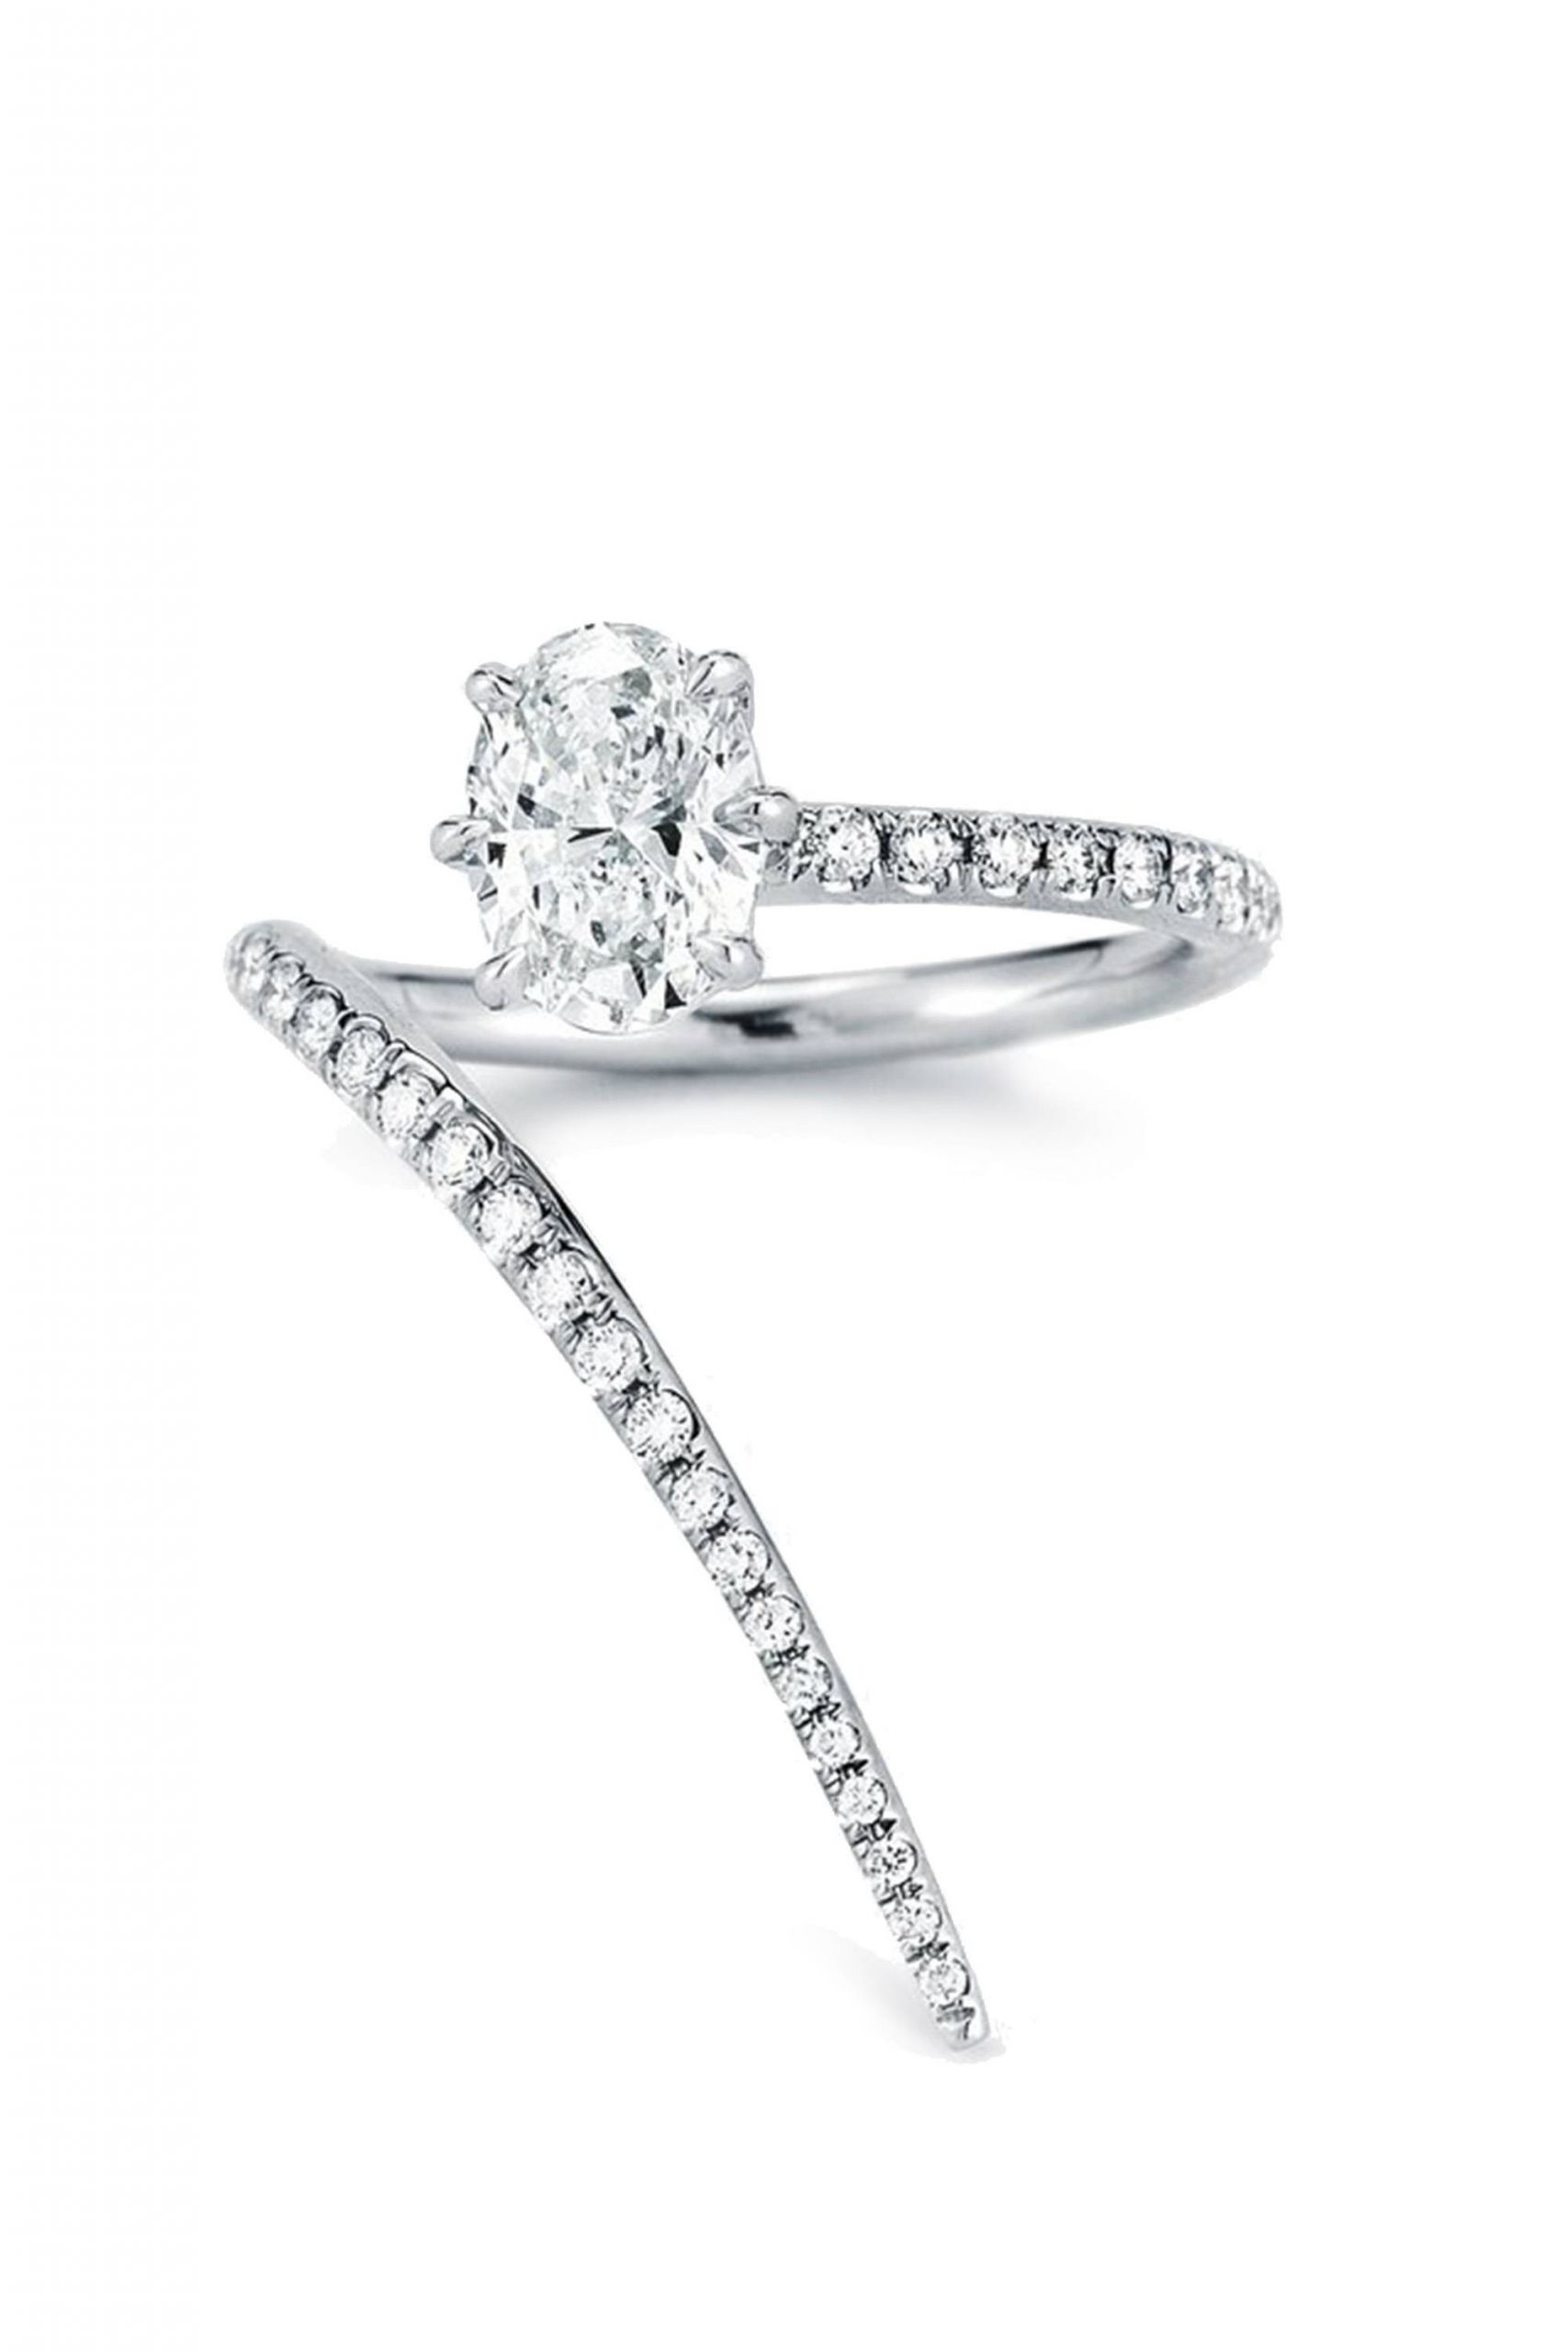 Non Diamond Wedding Rings
 15 Best Ideas of Artsy Wedding Rings